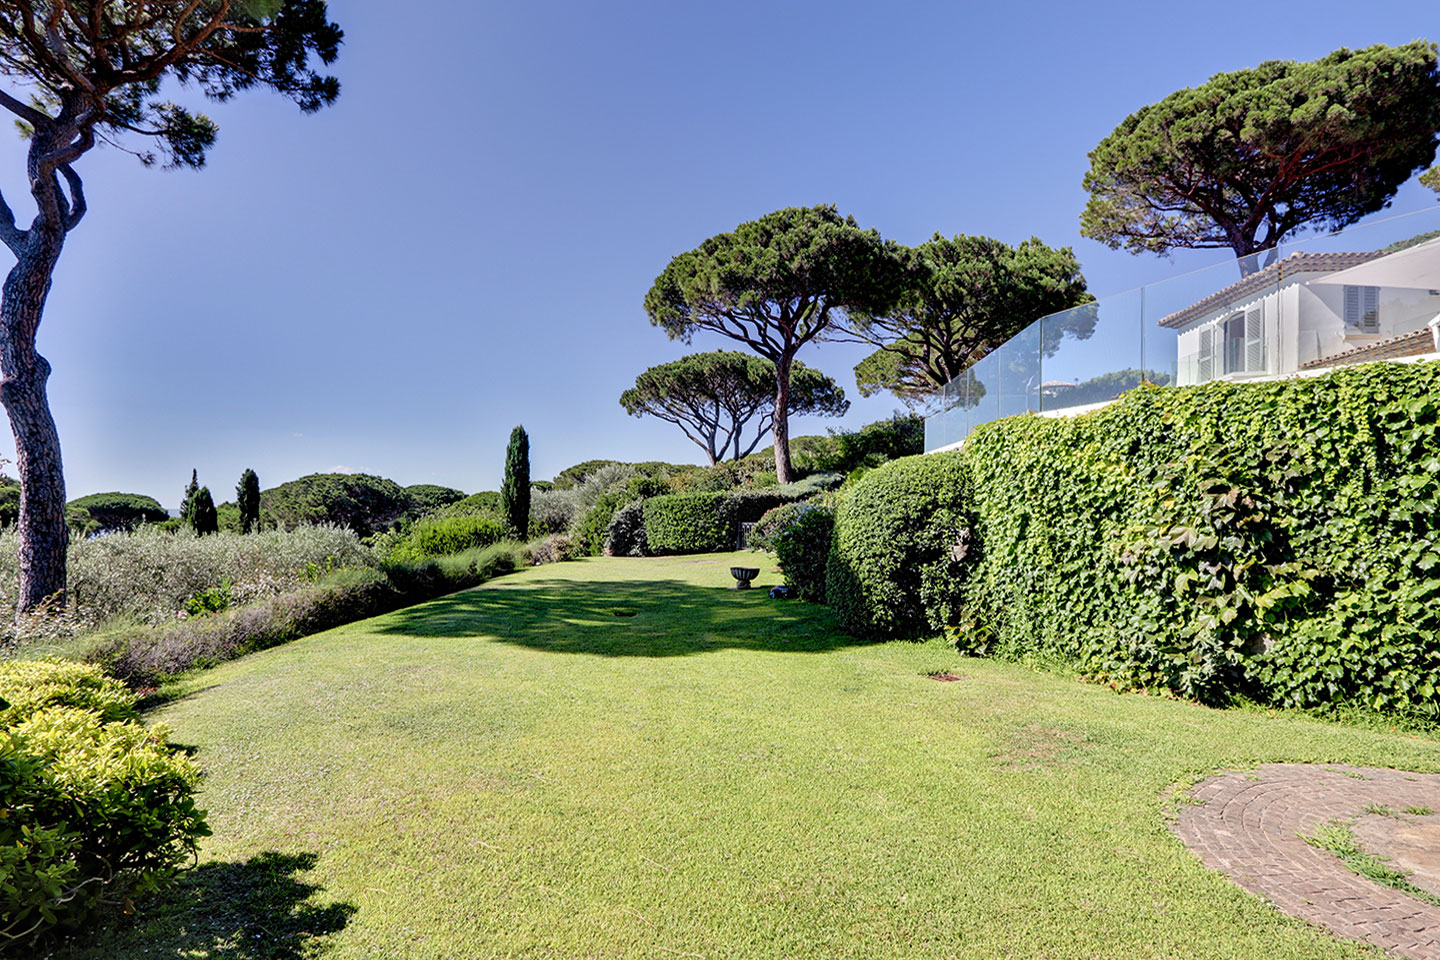 Luxury Property in Les Parcs de Saint Tropez, Côte d'Azur, France • The Land | Listed by Bernard Corcos, CEO of Finest International | FINEST RESIDENCES